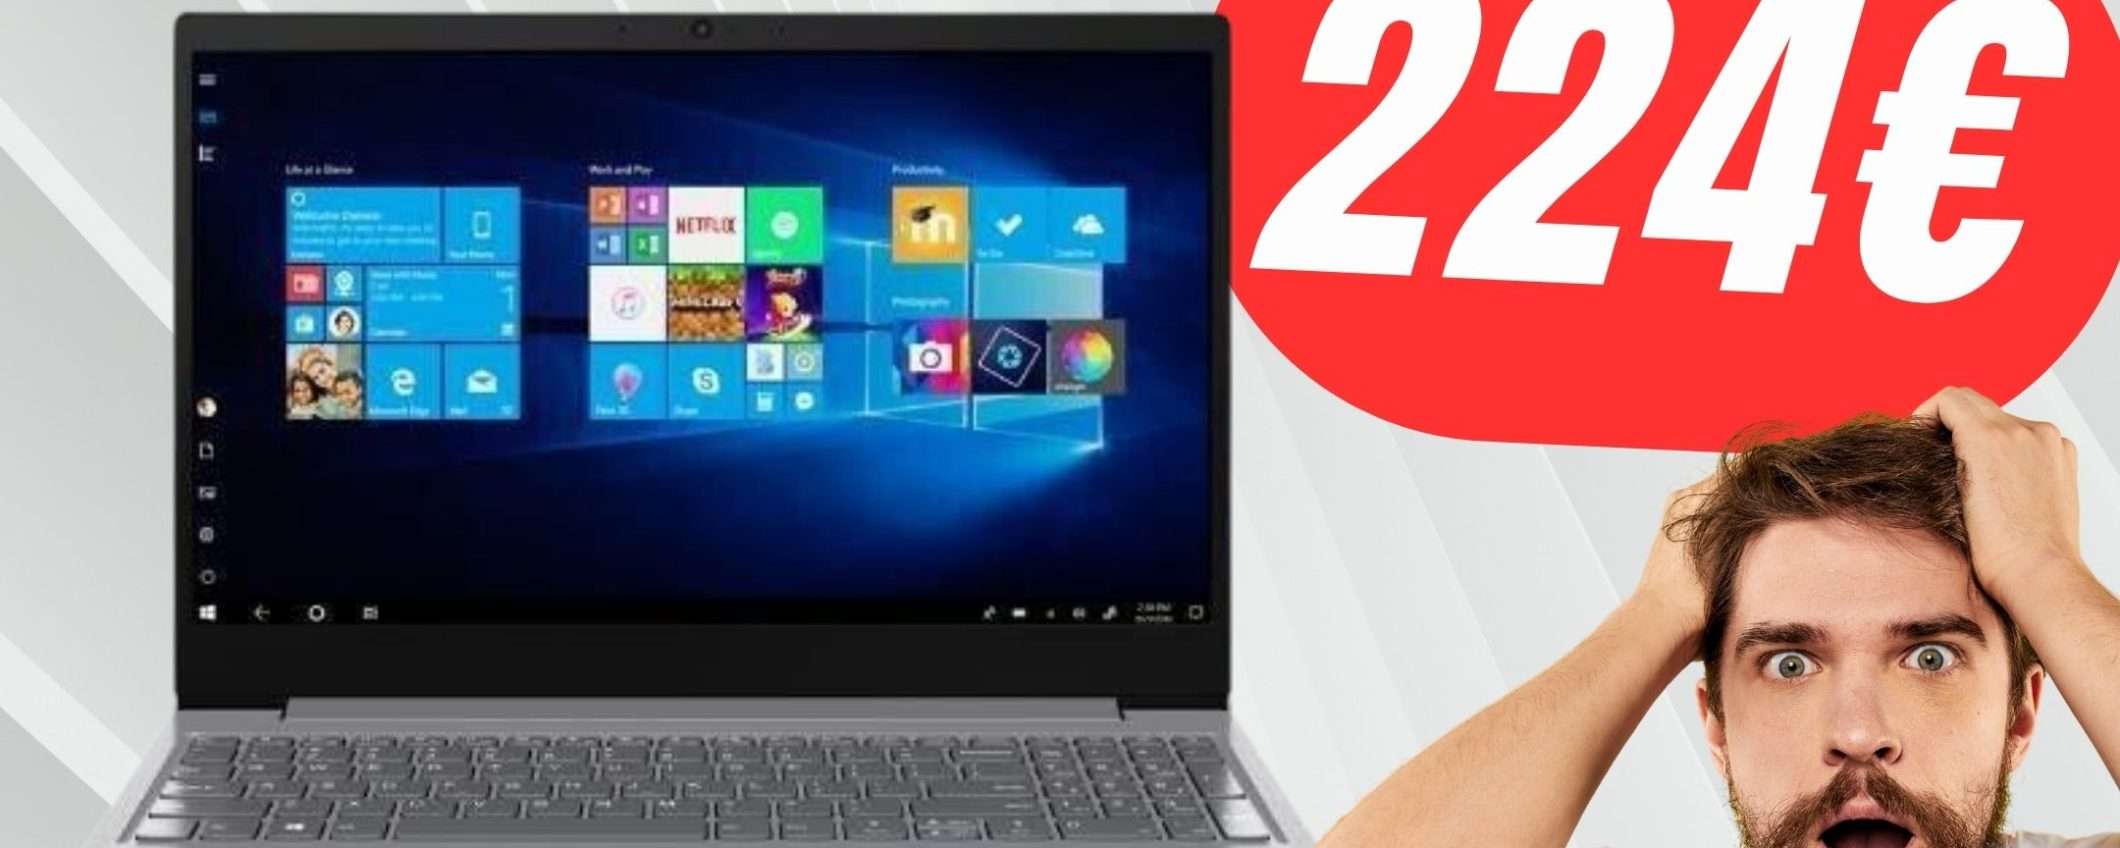 Questo Notebook Lenovo costa solo 224€ col COUPON: fai presto!